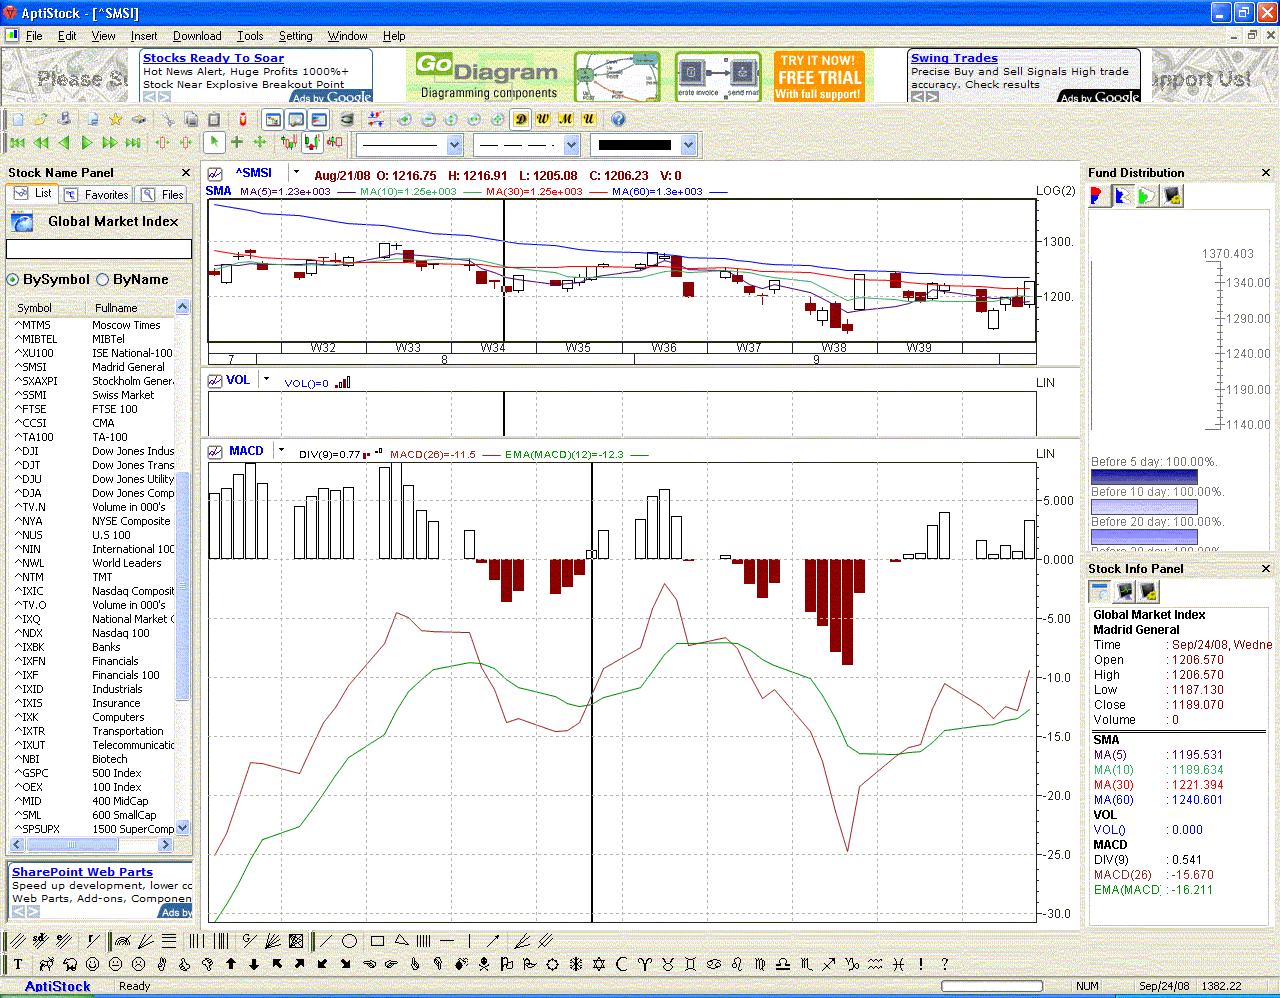 Main window - Data downloaded